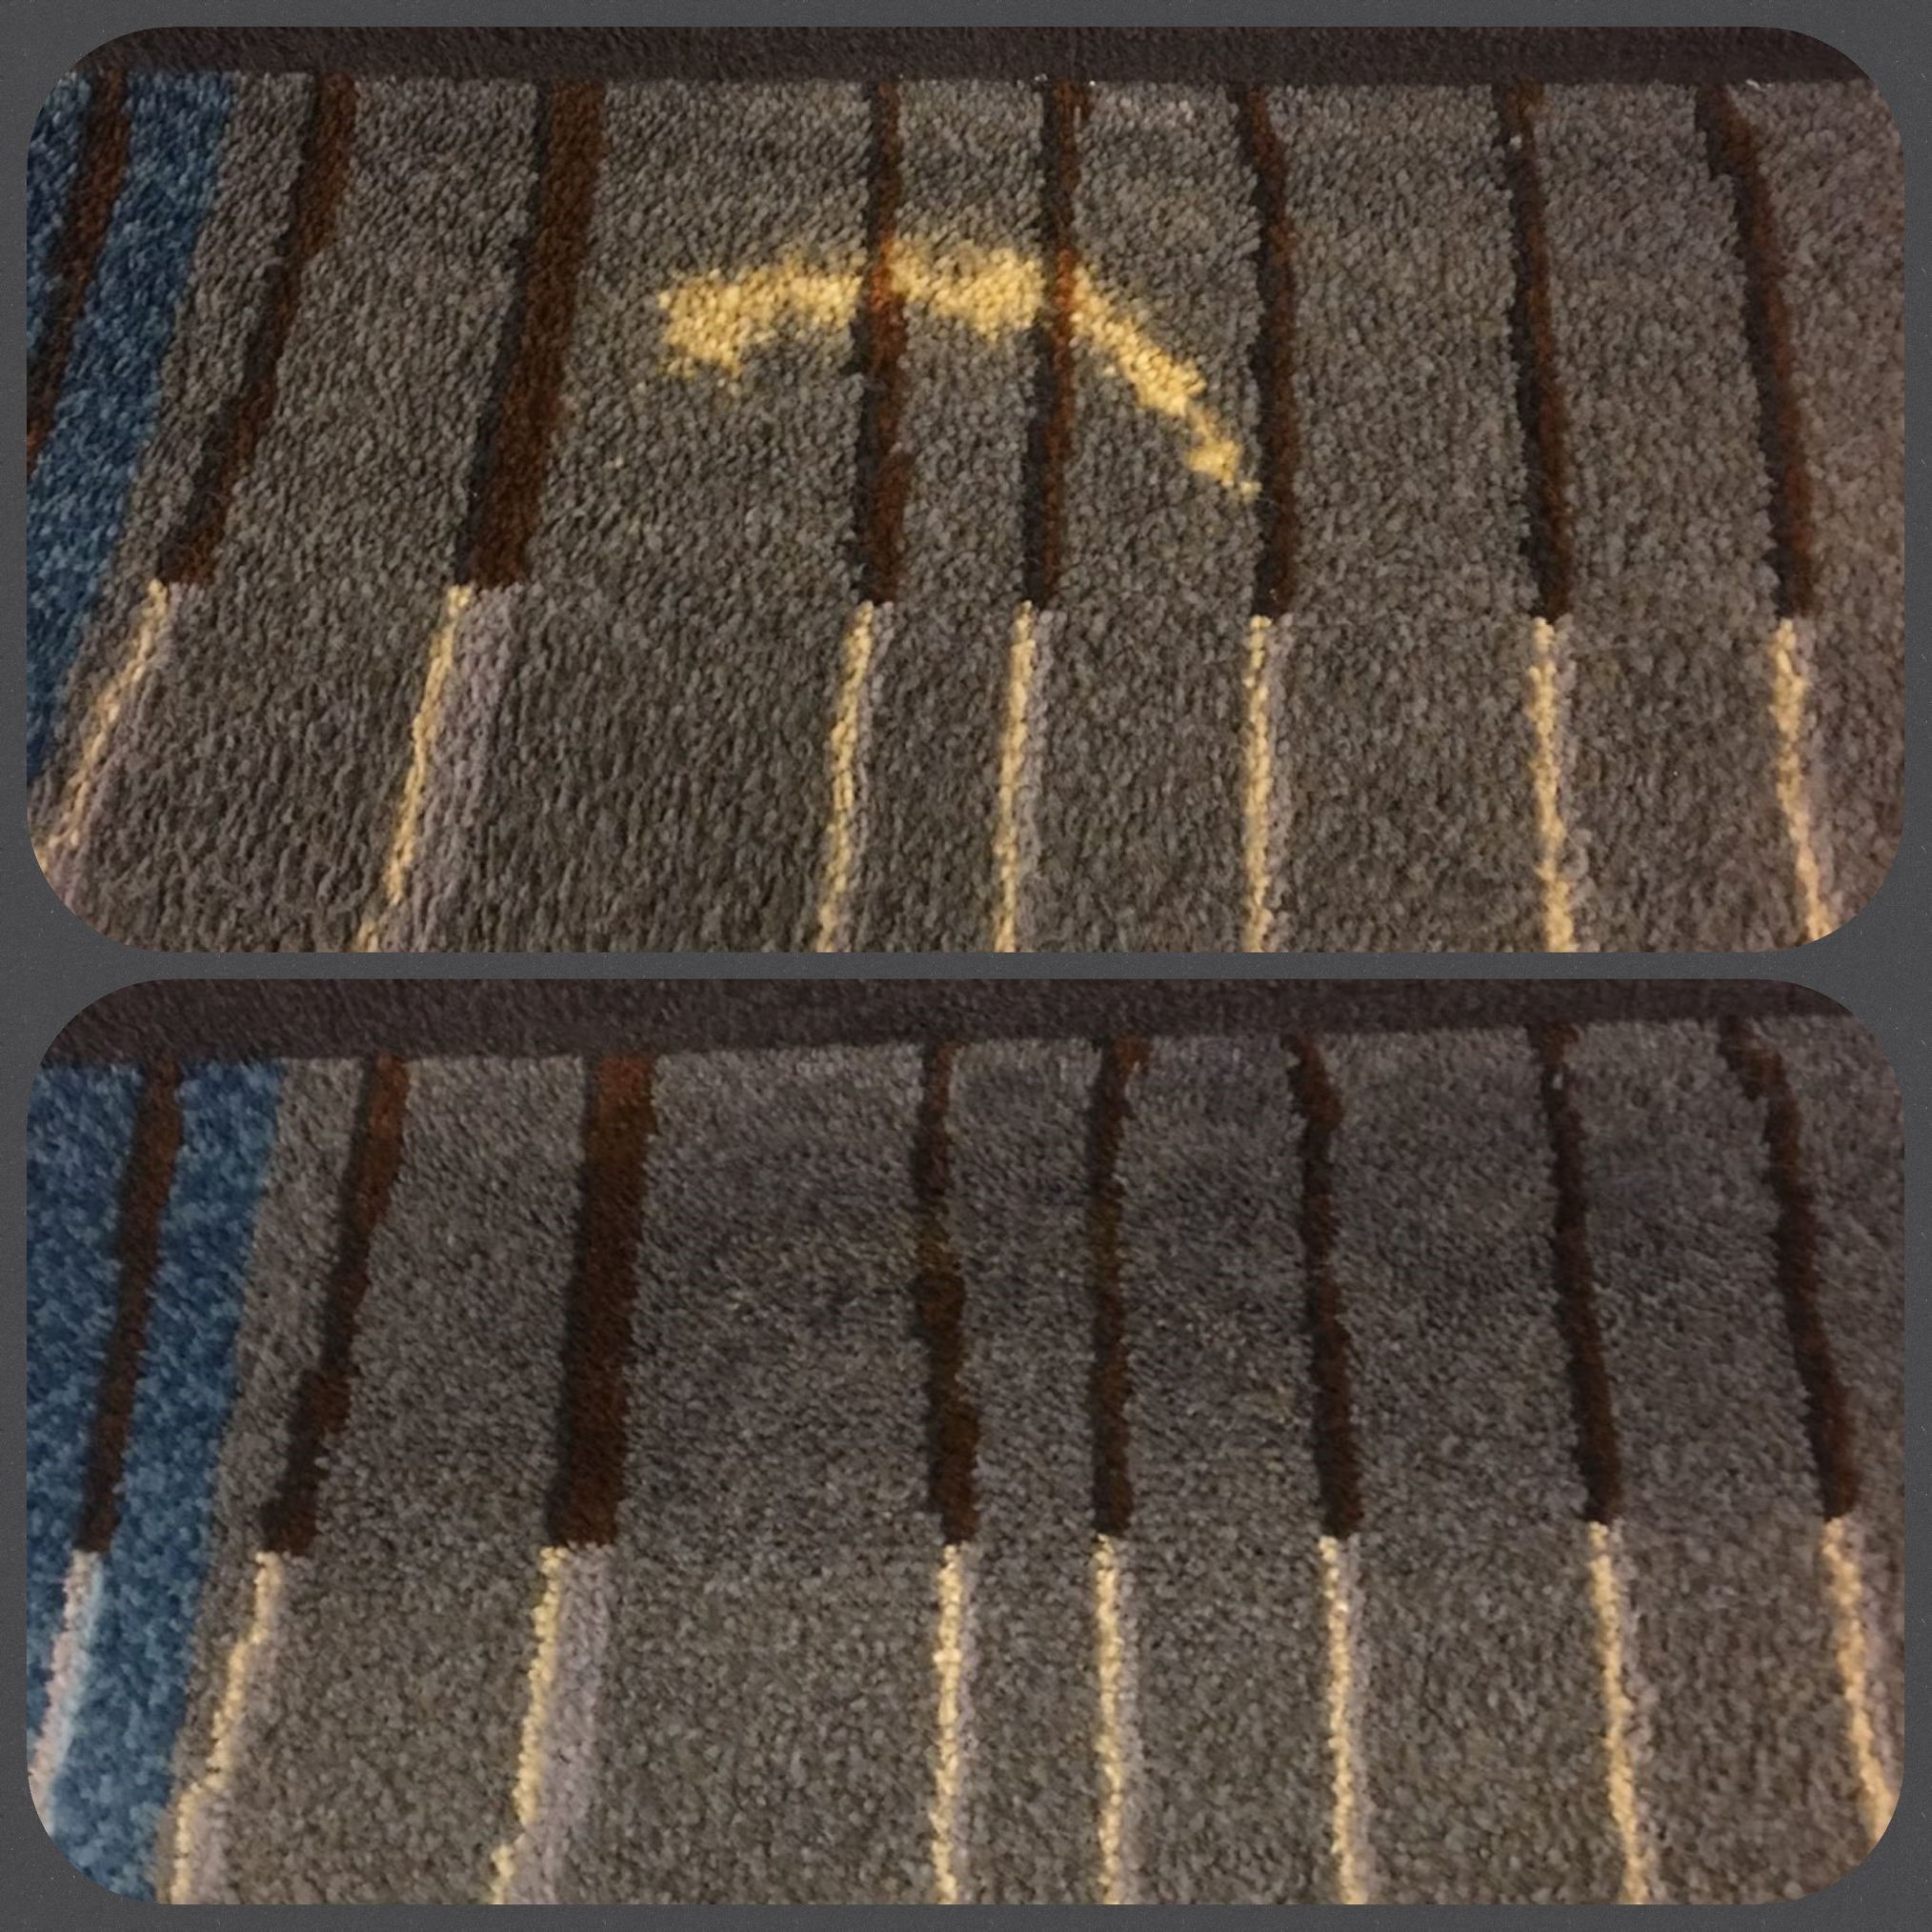 Bleach Spot Repair by Carpet Dye-Tech in Atlanta, GA